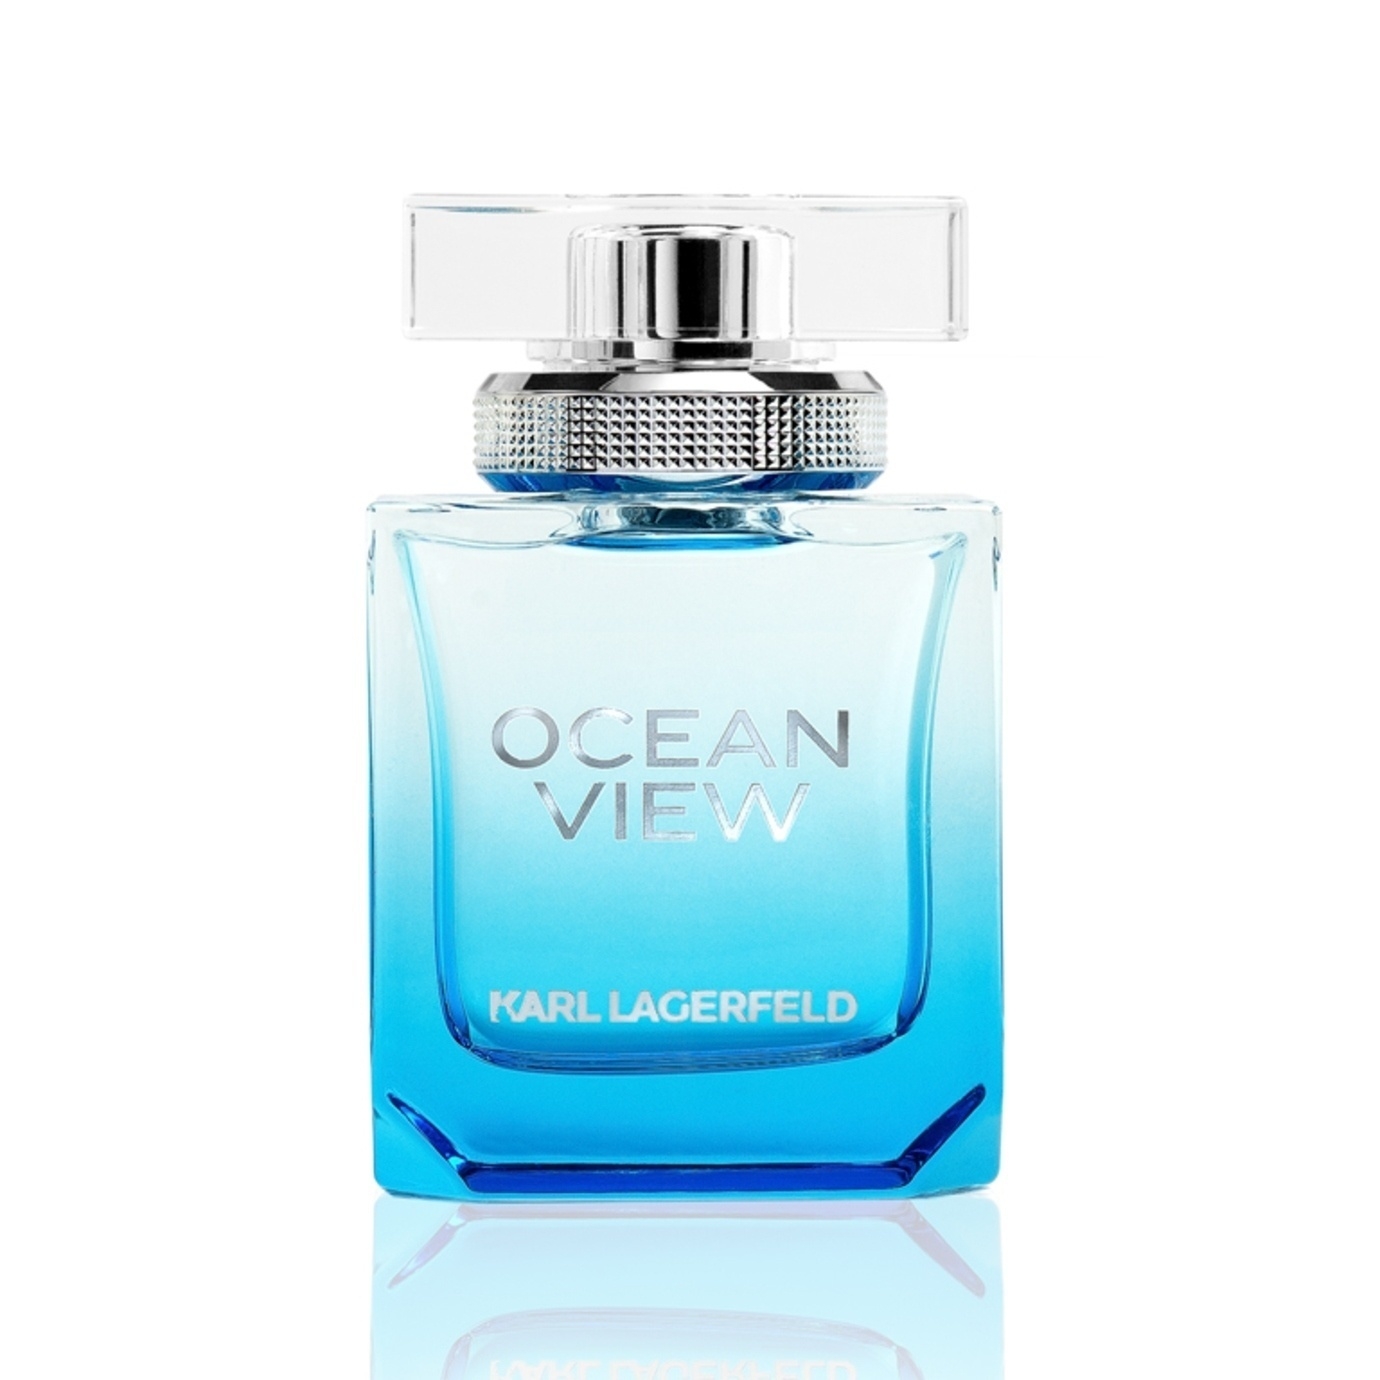 Karl Lagerfeld Ocean View Eau de Parfum Spray 85ml